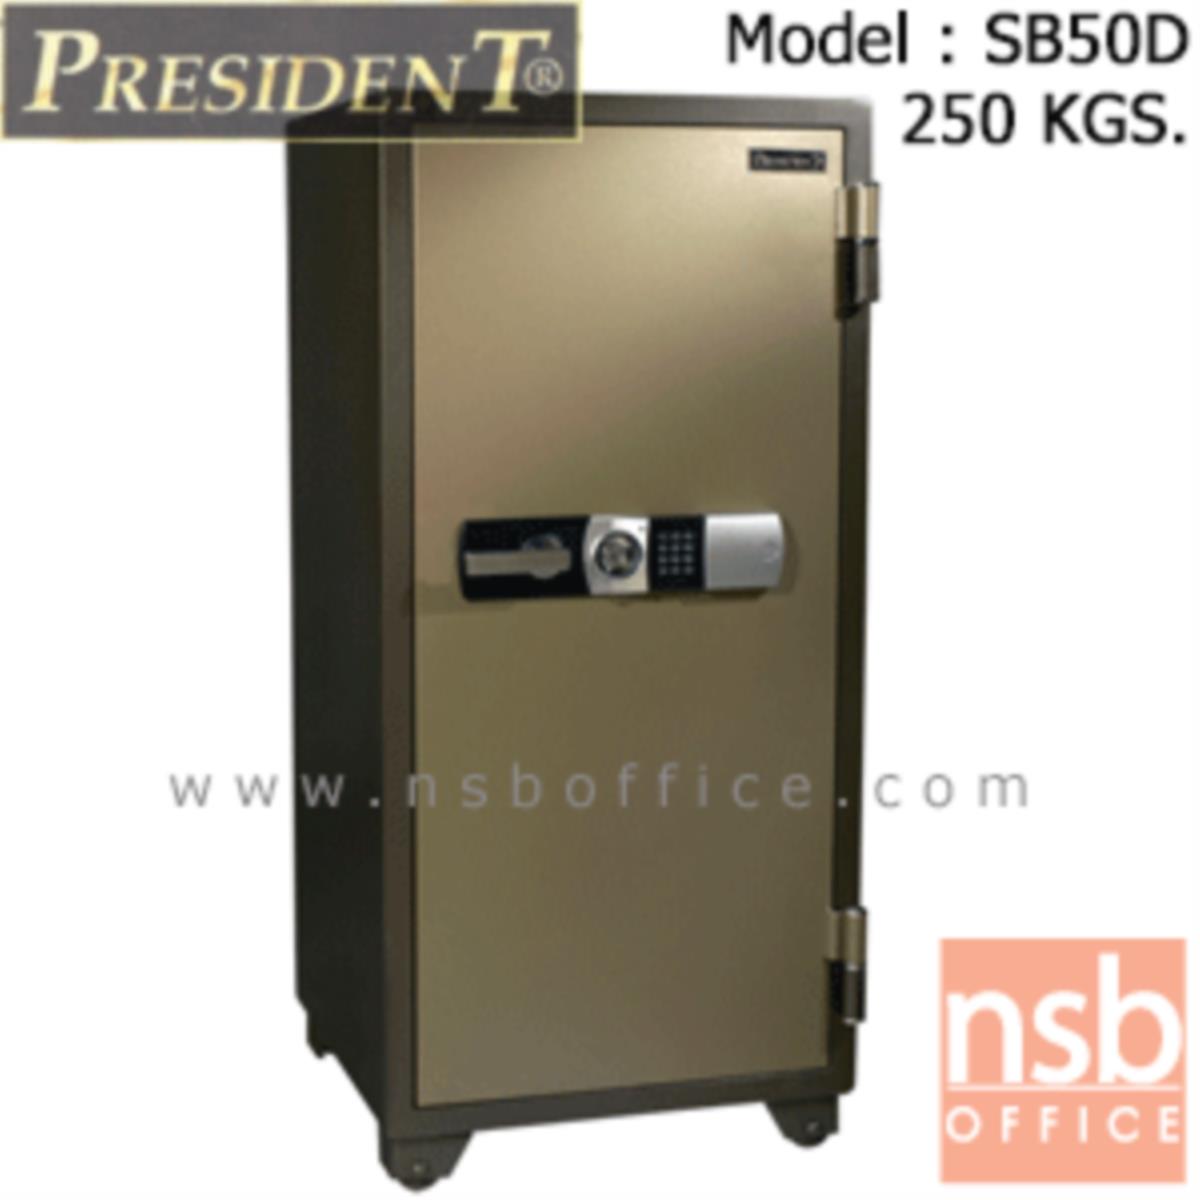 F05A015:ตู้เซฟนิรภัยชนิดดิจิตอล 250 กก.  รุ่น PRESIDENT-SB50D   มี 1 กุญแจ 1 รหัส (รหัสใช้กดหน้าตู้)